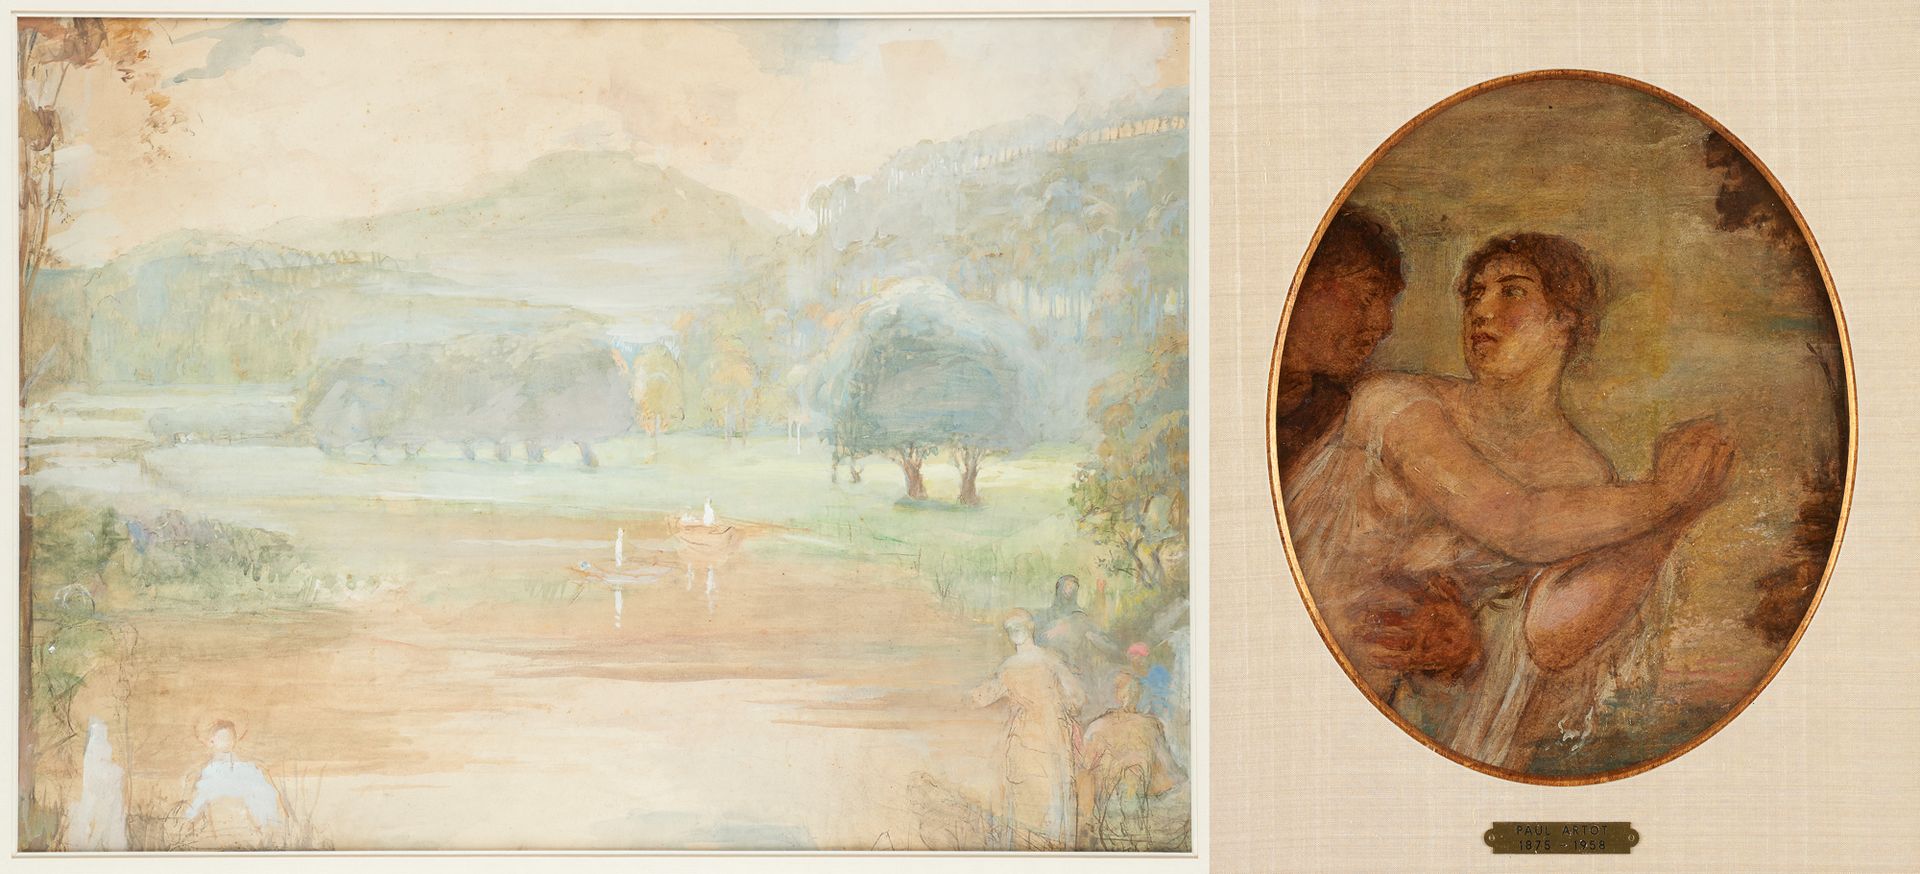 Paul ARTOT École belge (1875-1958) Watercolor on paper: View on the Hermeton.

B&hellip;